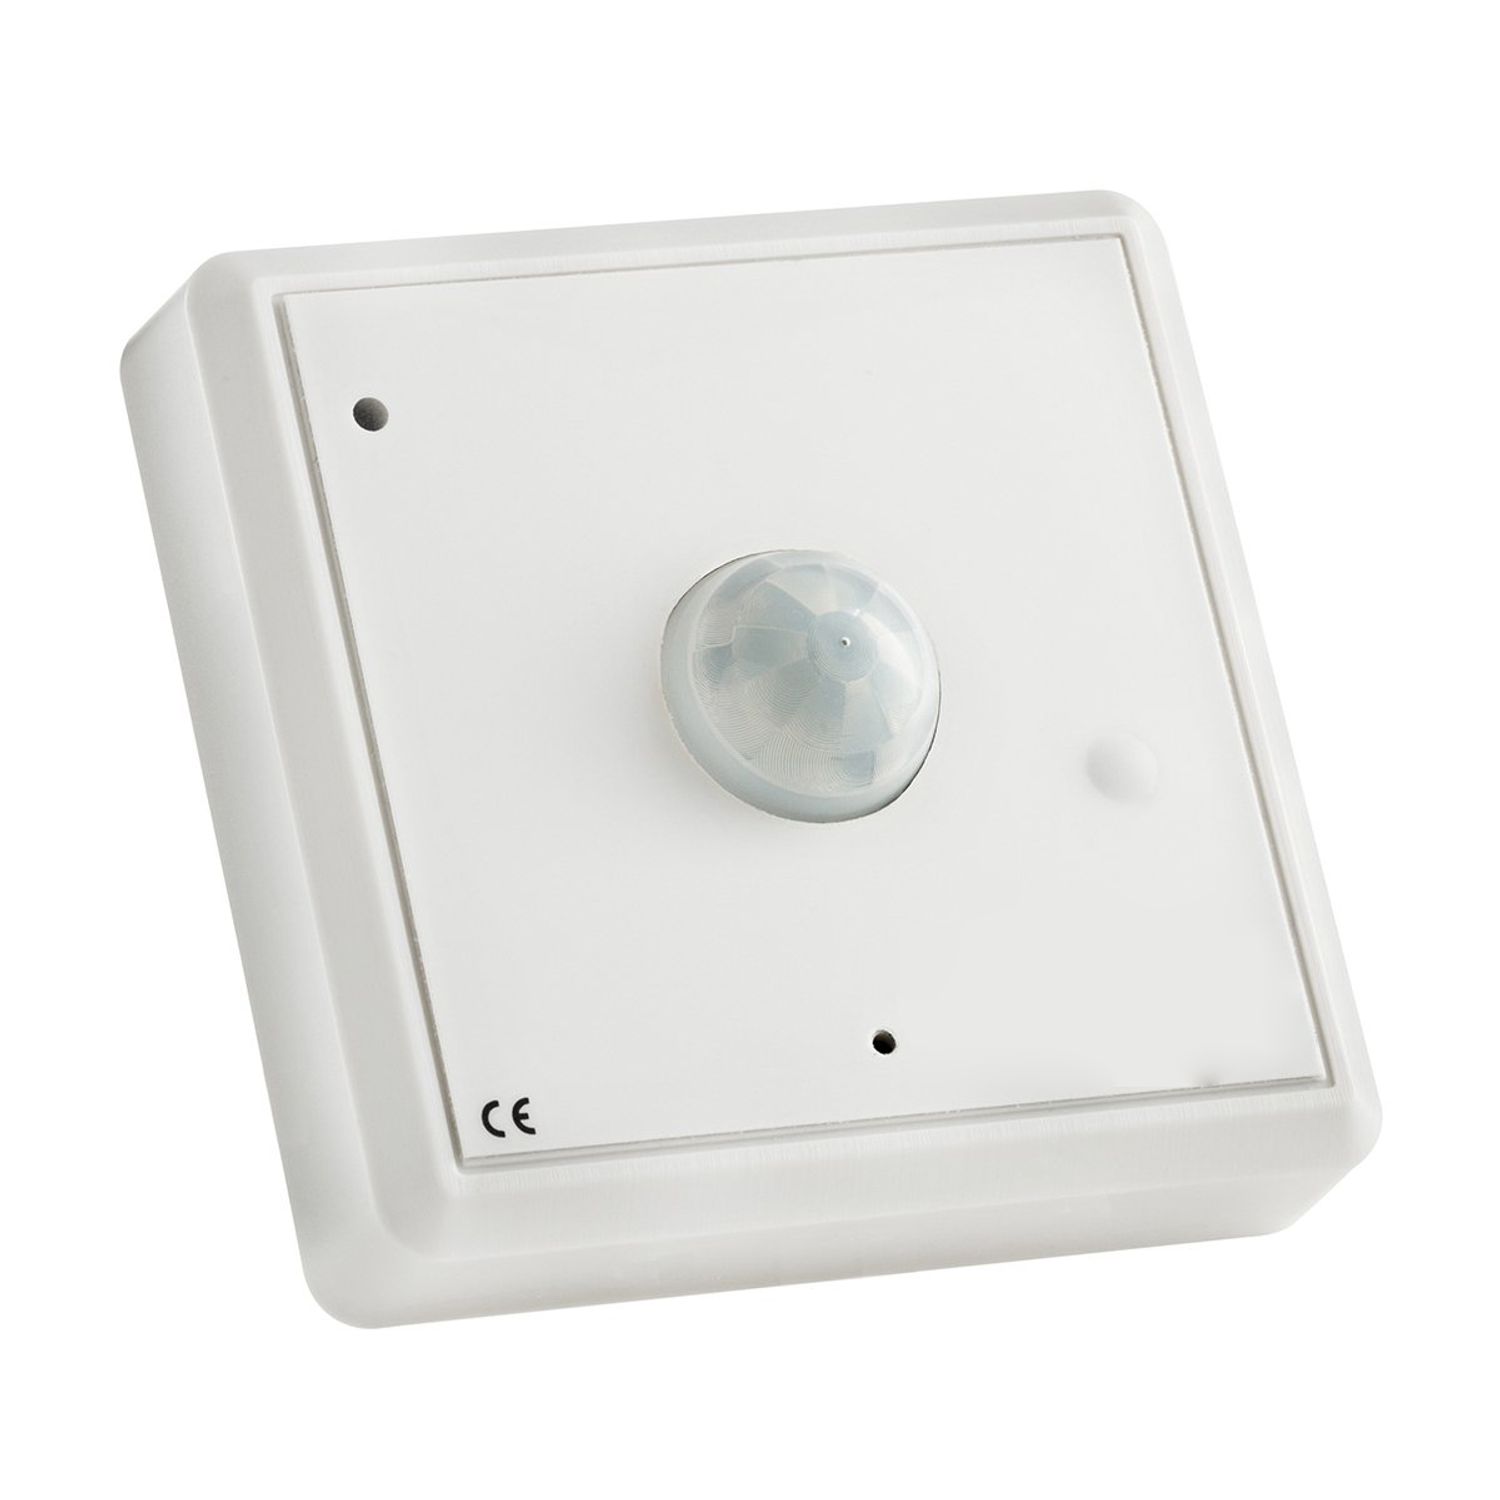 SZOMK Plastic Control Panel Box for Wi-Fi Room Energy Management System